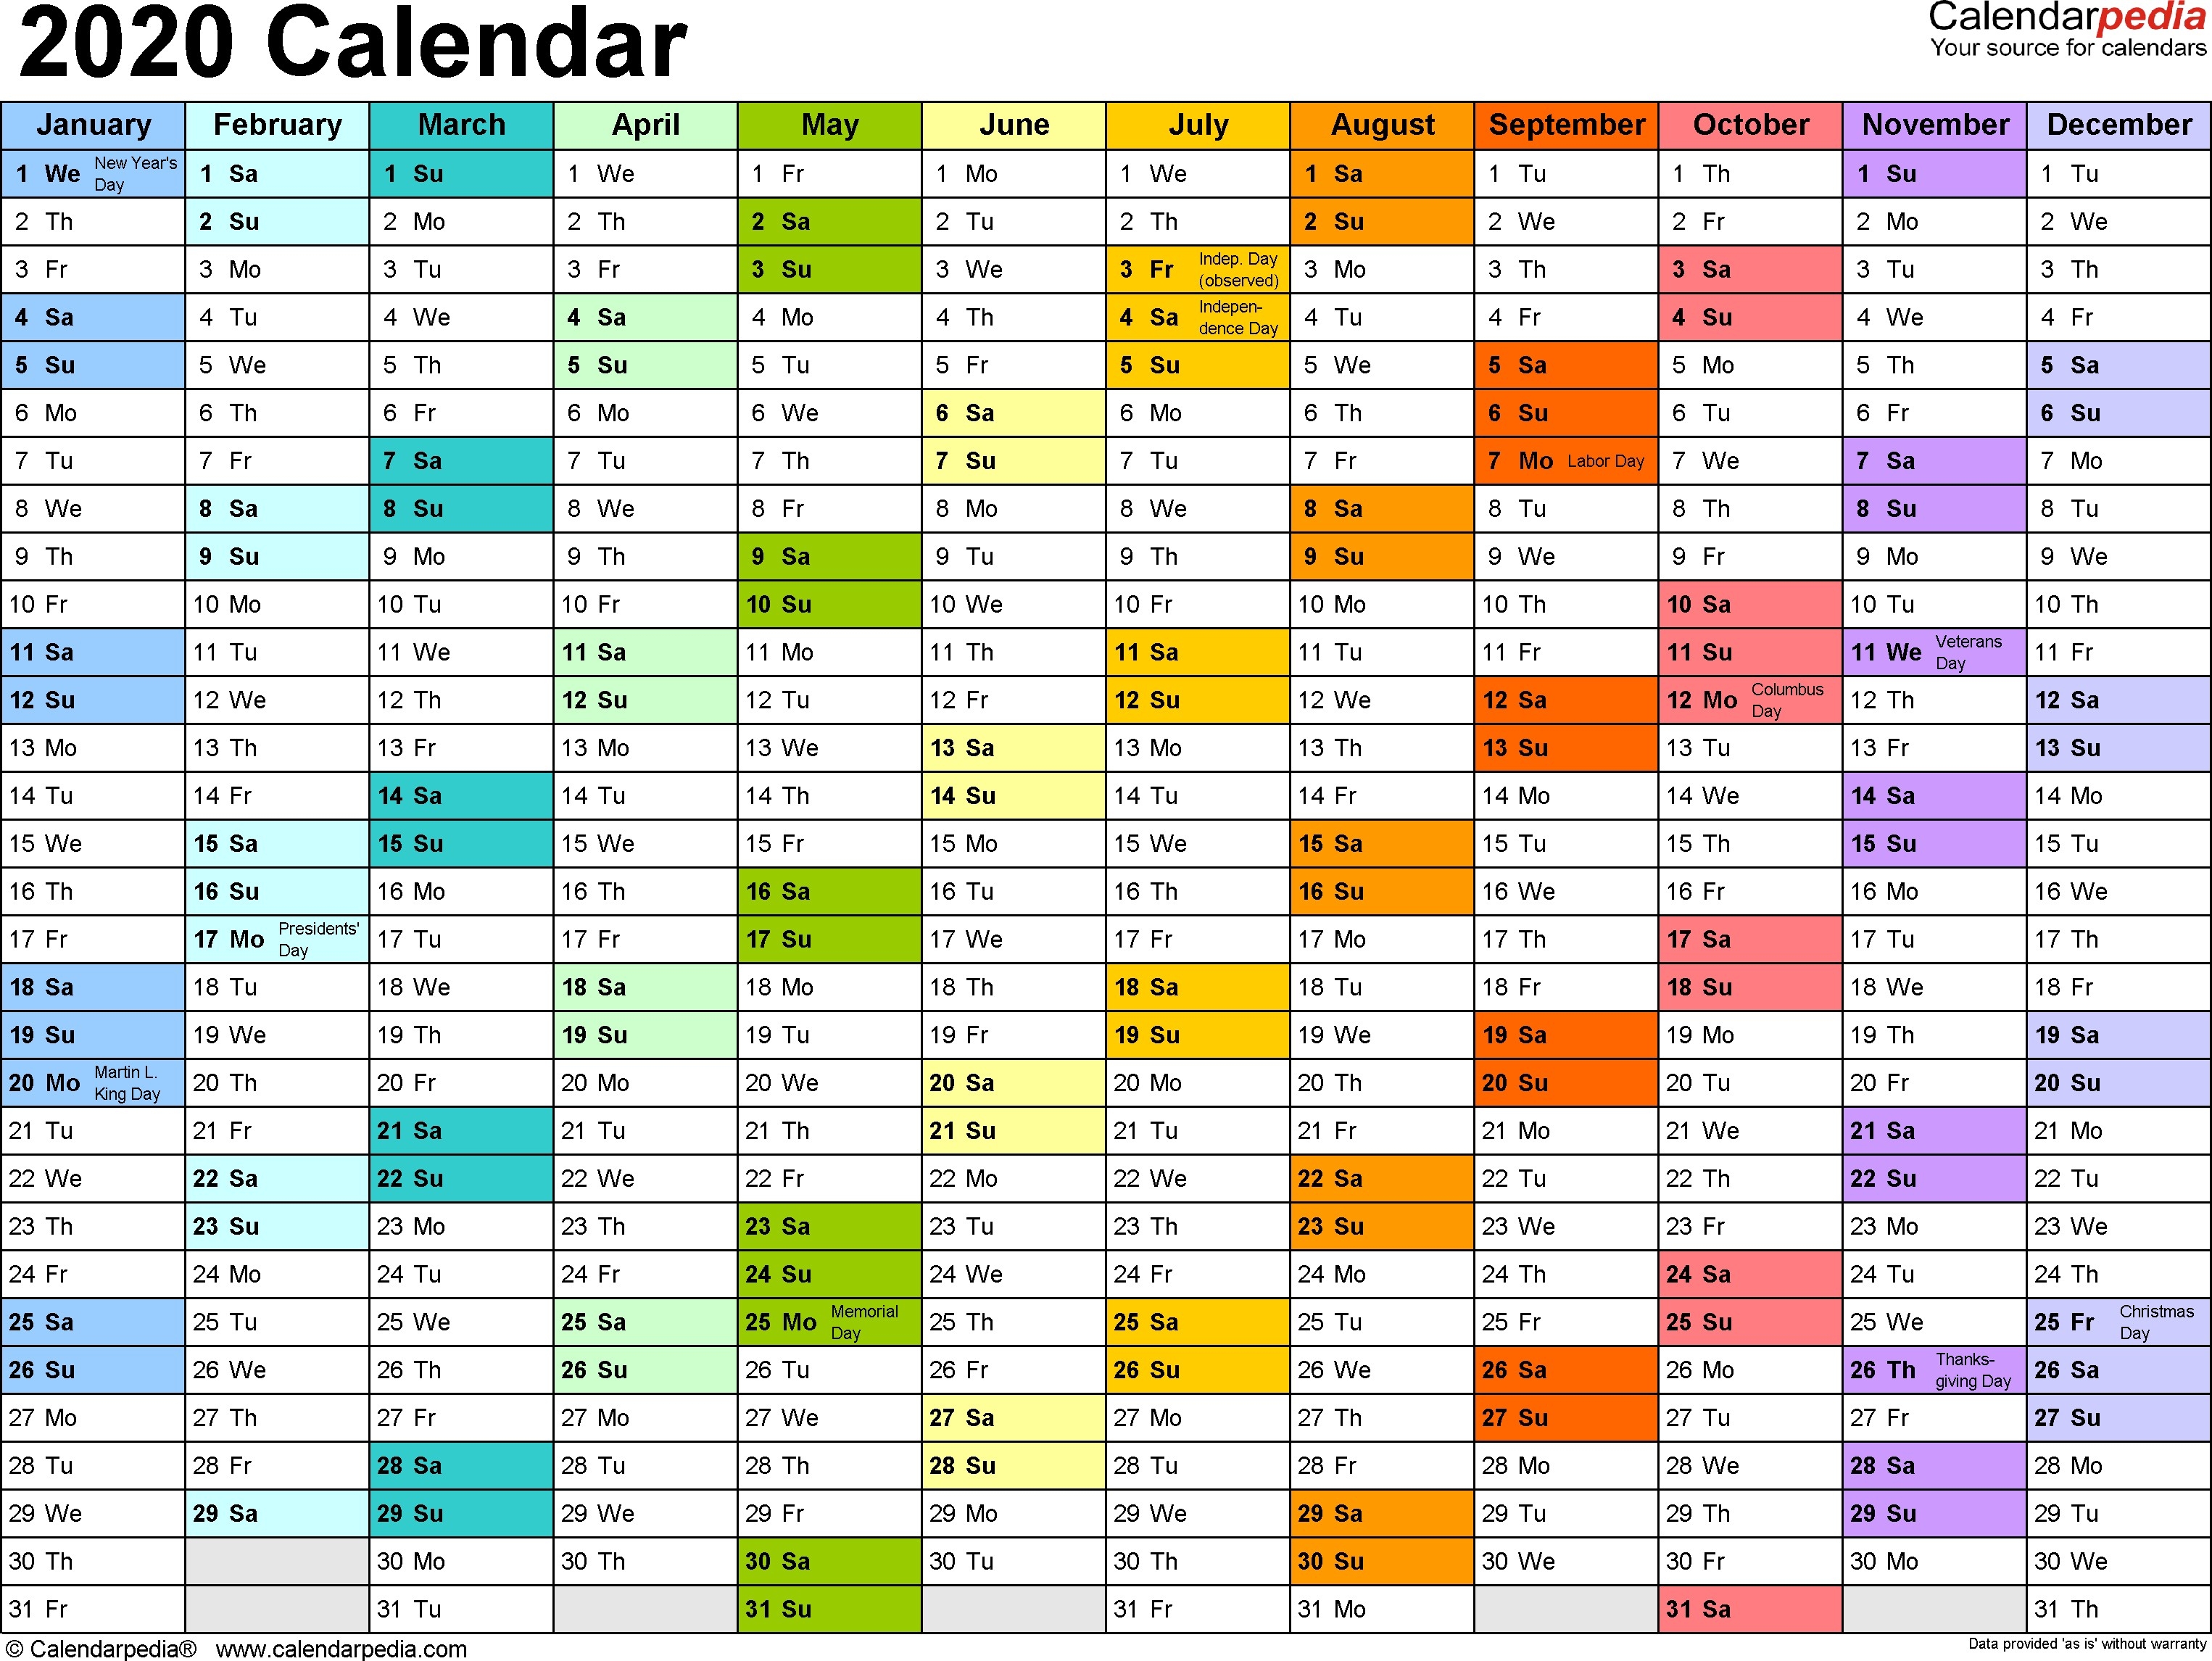 2020 Calendar Excel – Calendar Printable Week-2020 Calendare With Holidays By Vertex42.com